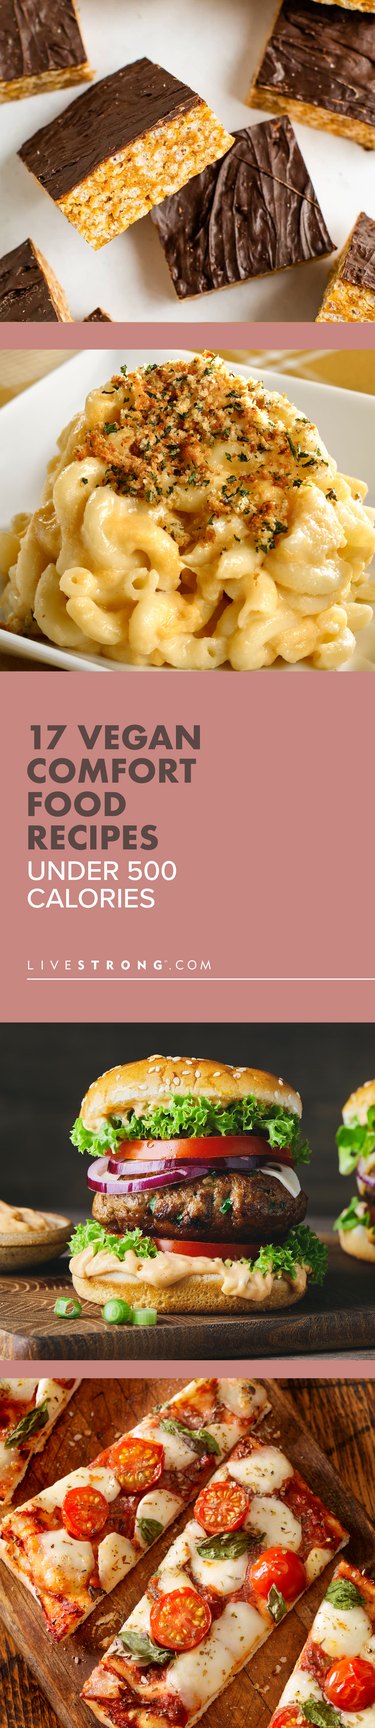 pin showing vegan comfort food recipes